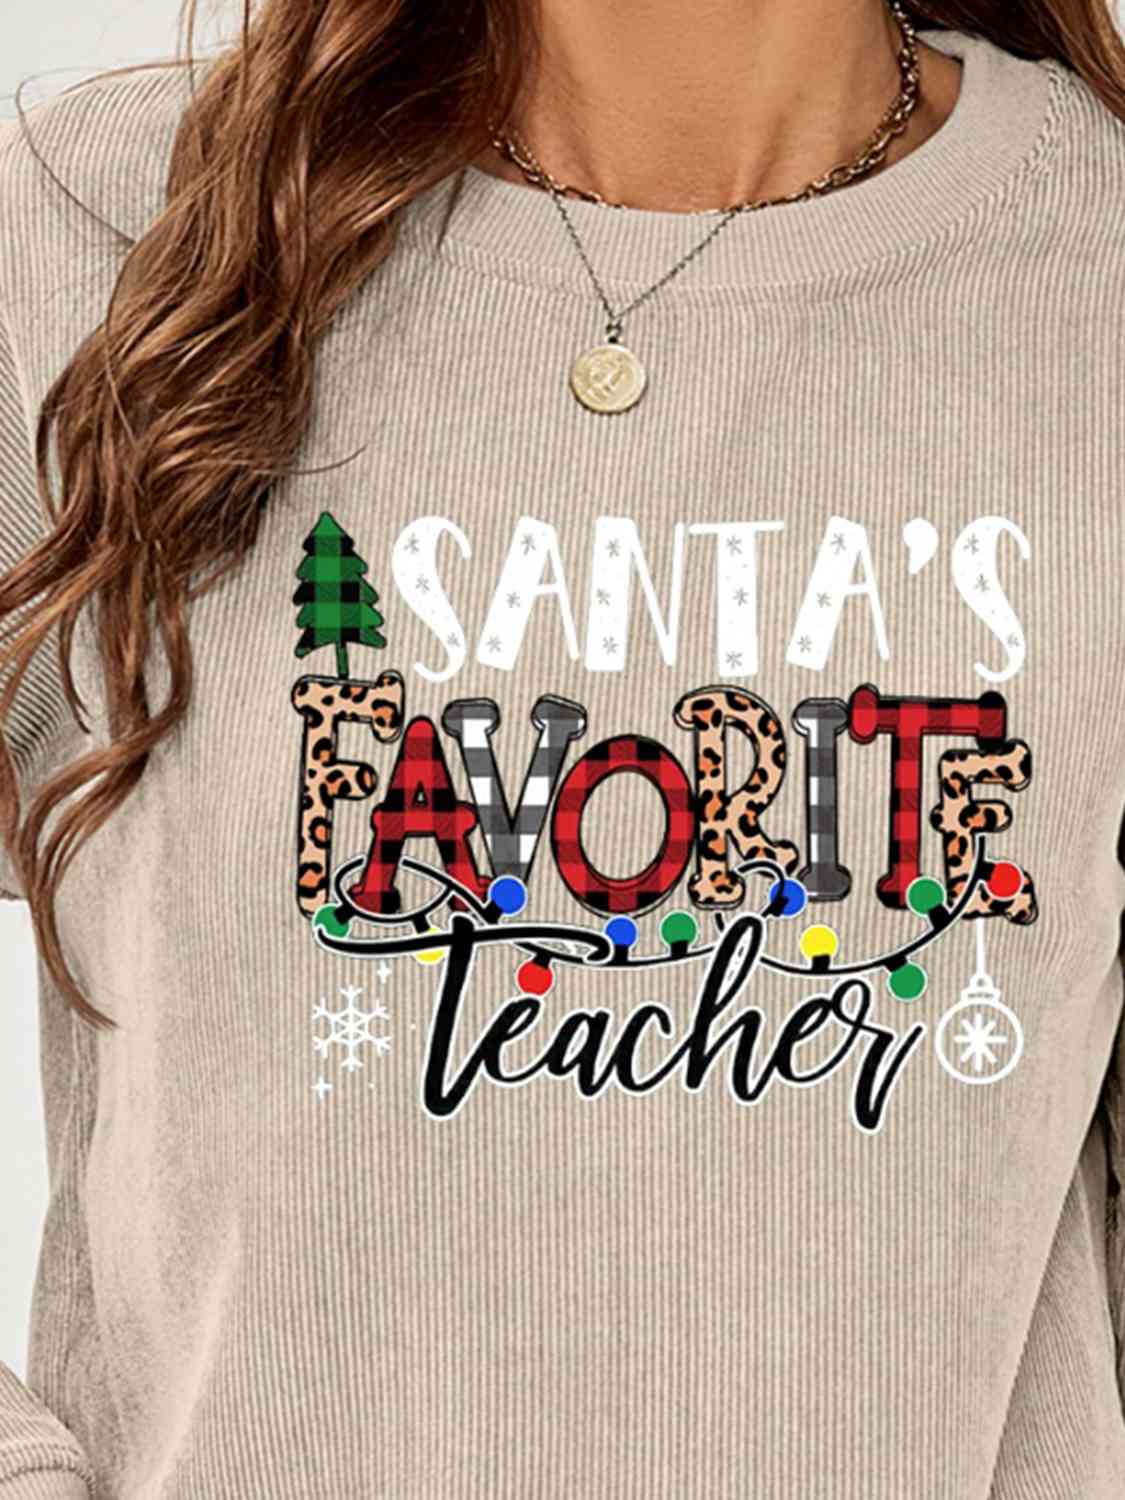 SANTA'S FAVORITE TEACHER Graphic Sweatshirt | CLOTHING,SHOES & ACCESSORIES | Changeable, christmas, Ship From Overseas, sweatshirt | Trendsi